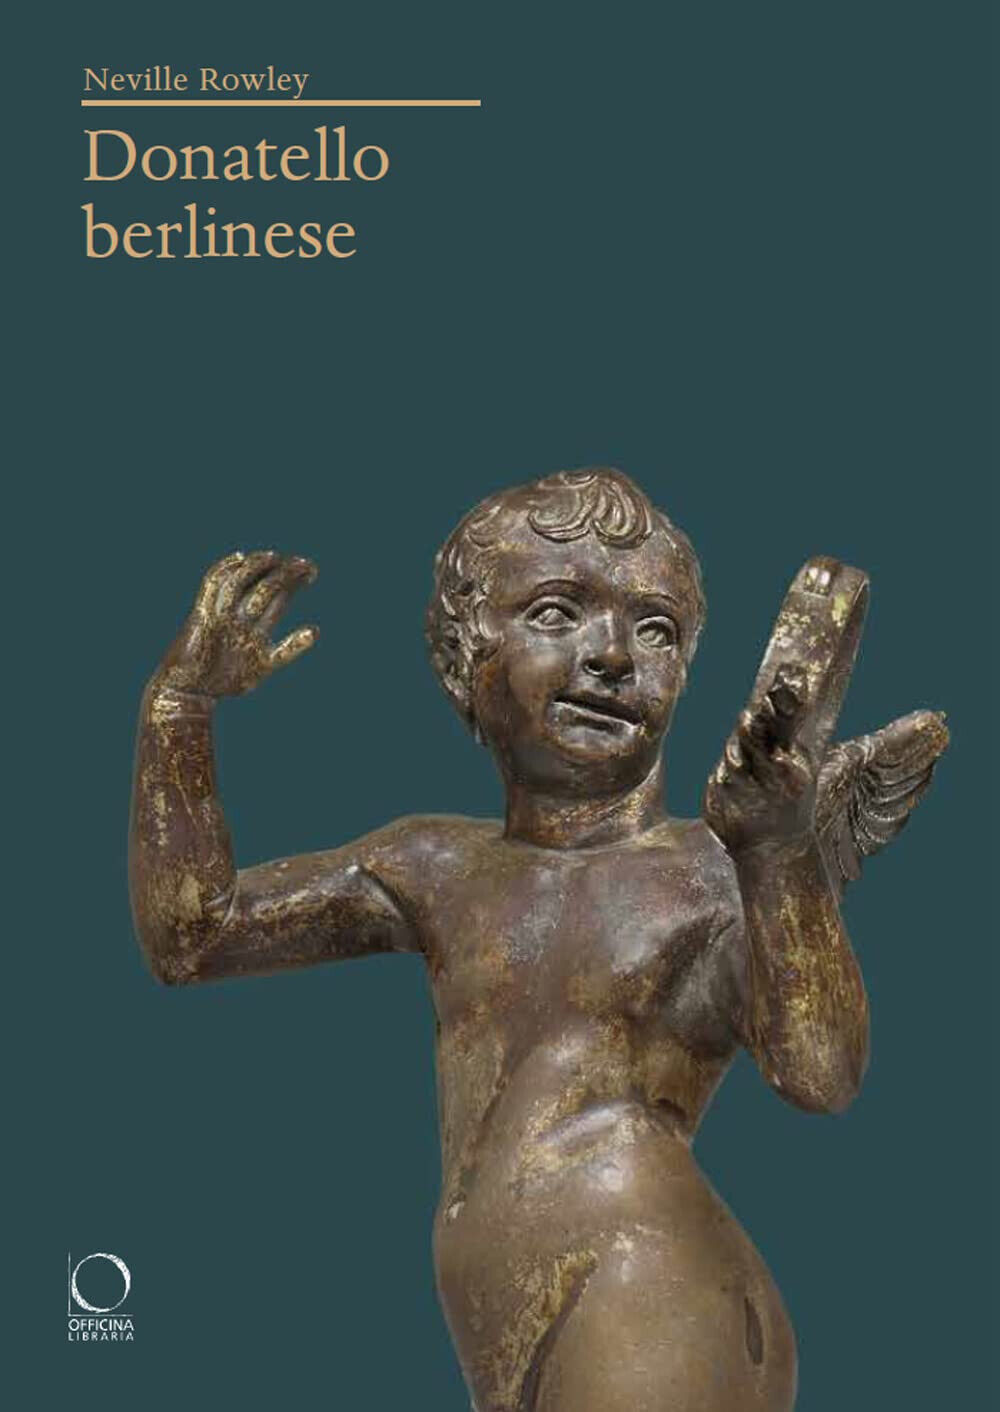 Donatello berlinese - Neville Rowley - Officina Libraria, 2022 libro usato